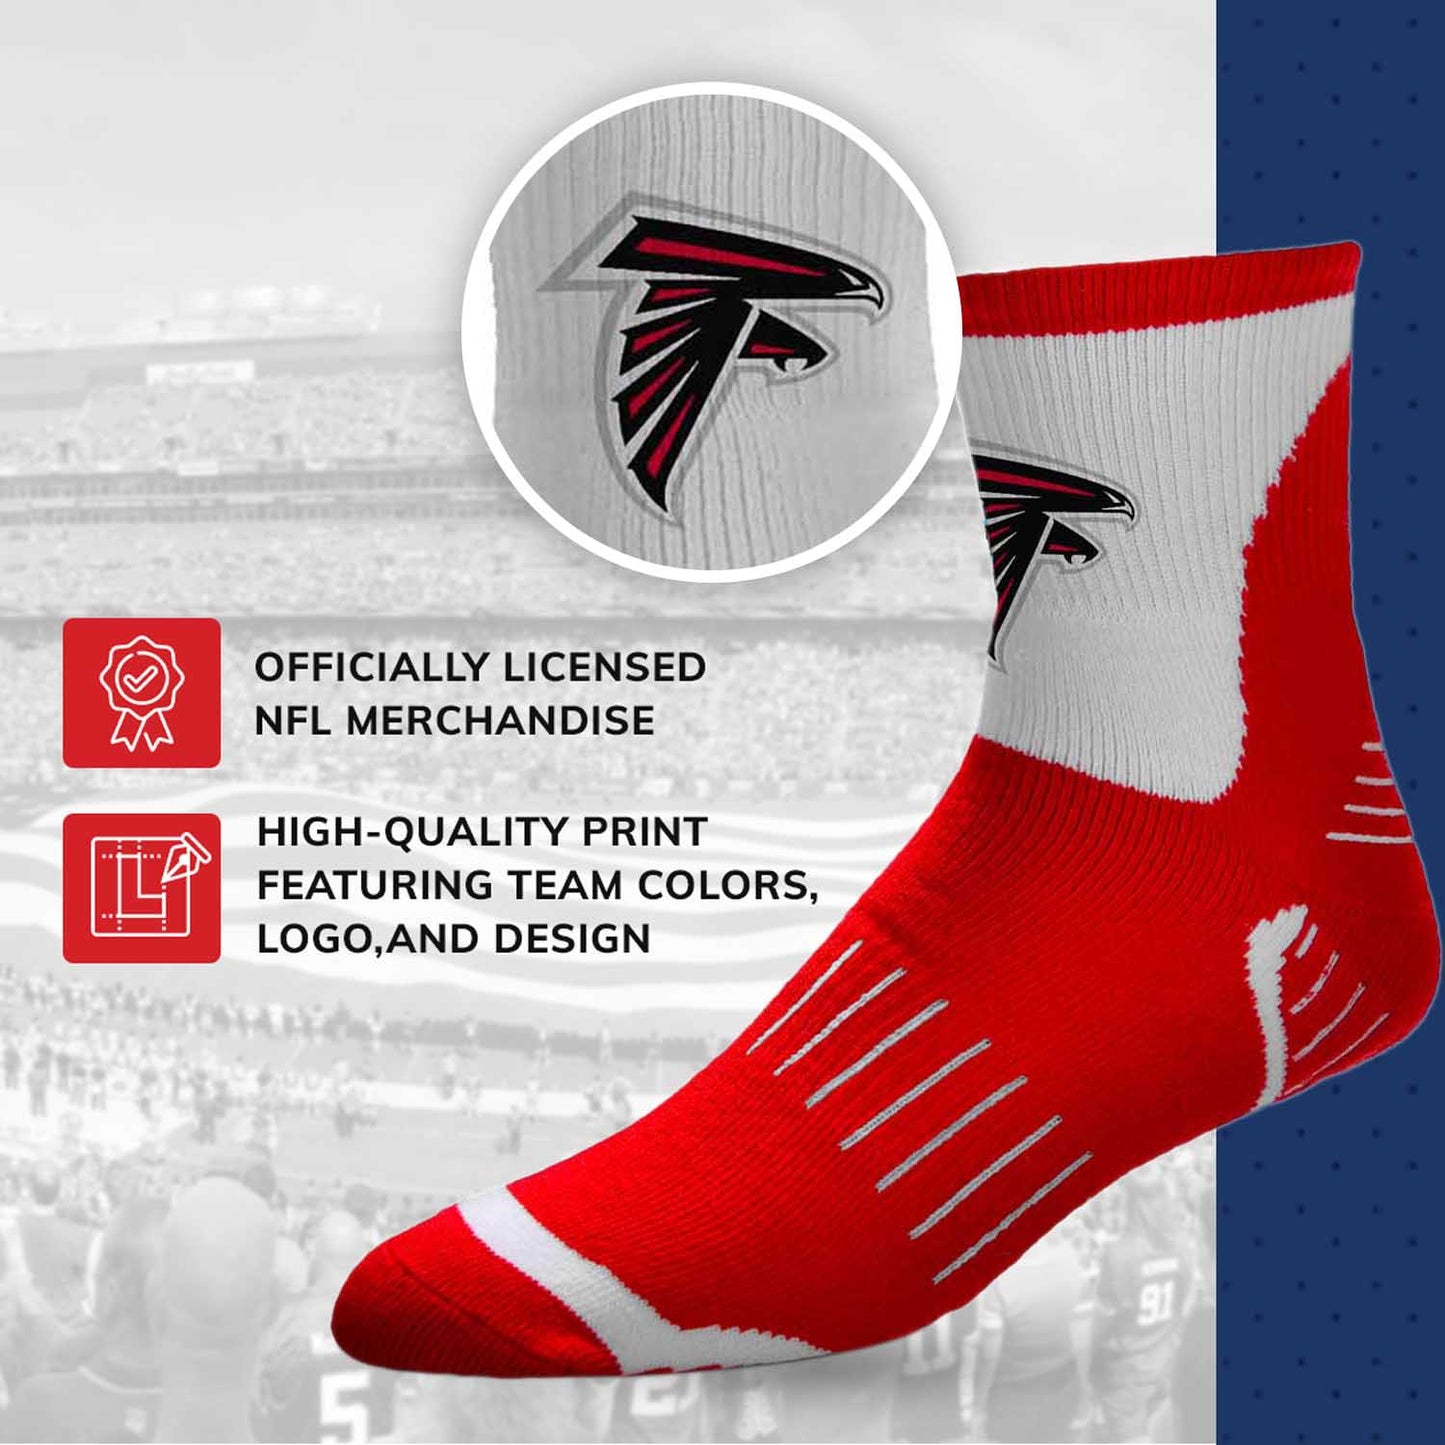 Atlanta Falcons NFL Performance Quarter Length Socks - Red